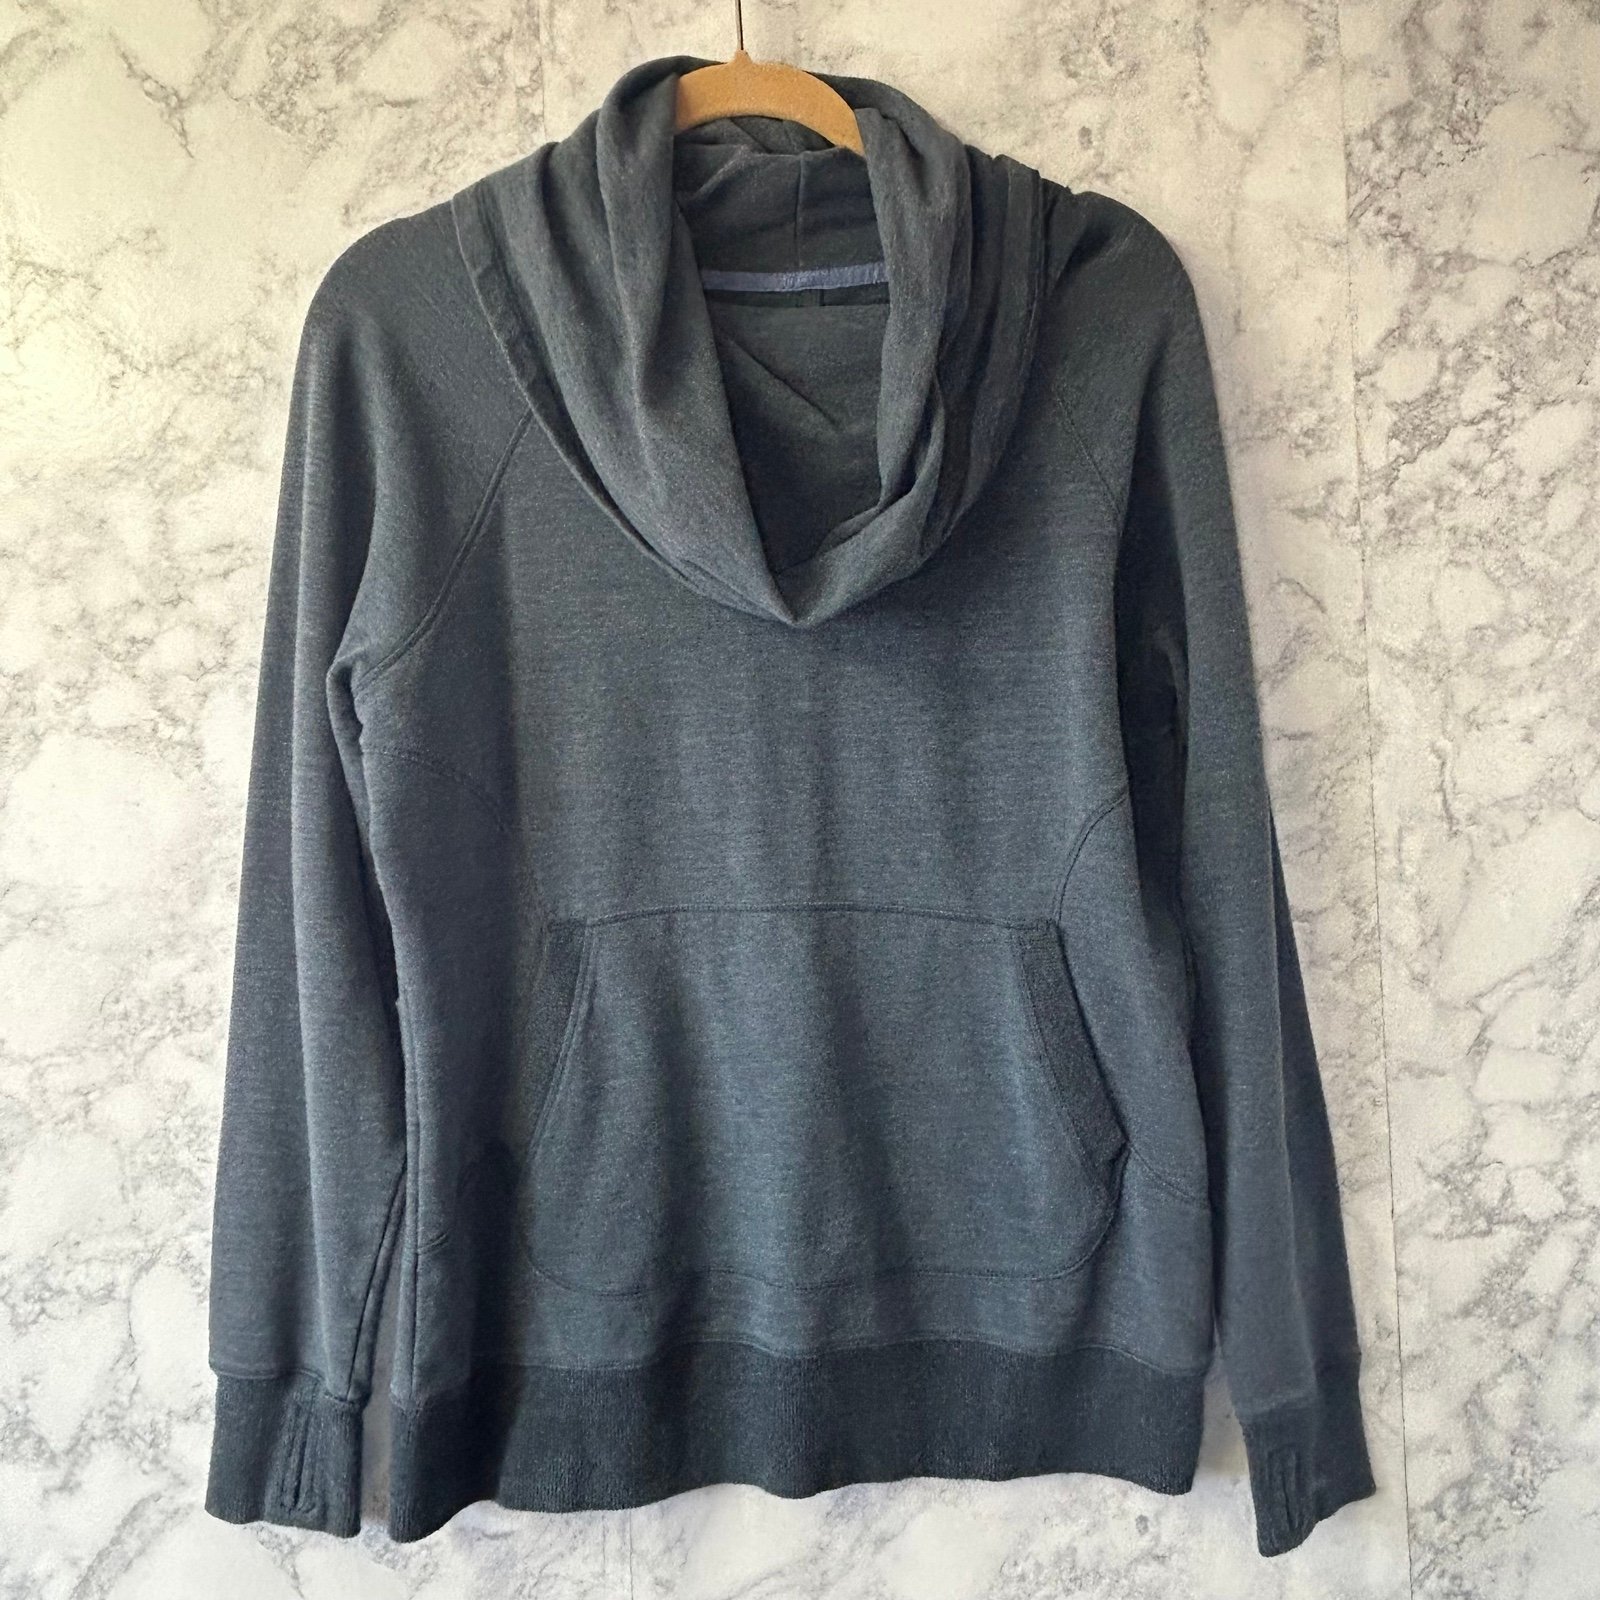 L.L bean cozy pullover sweatshirt- woman’s size large a